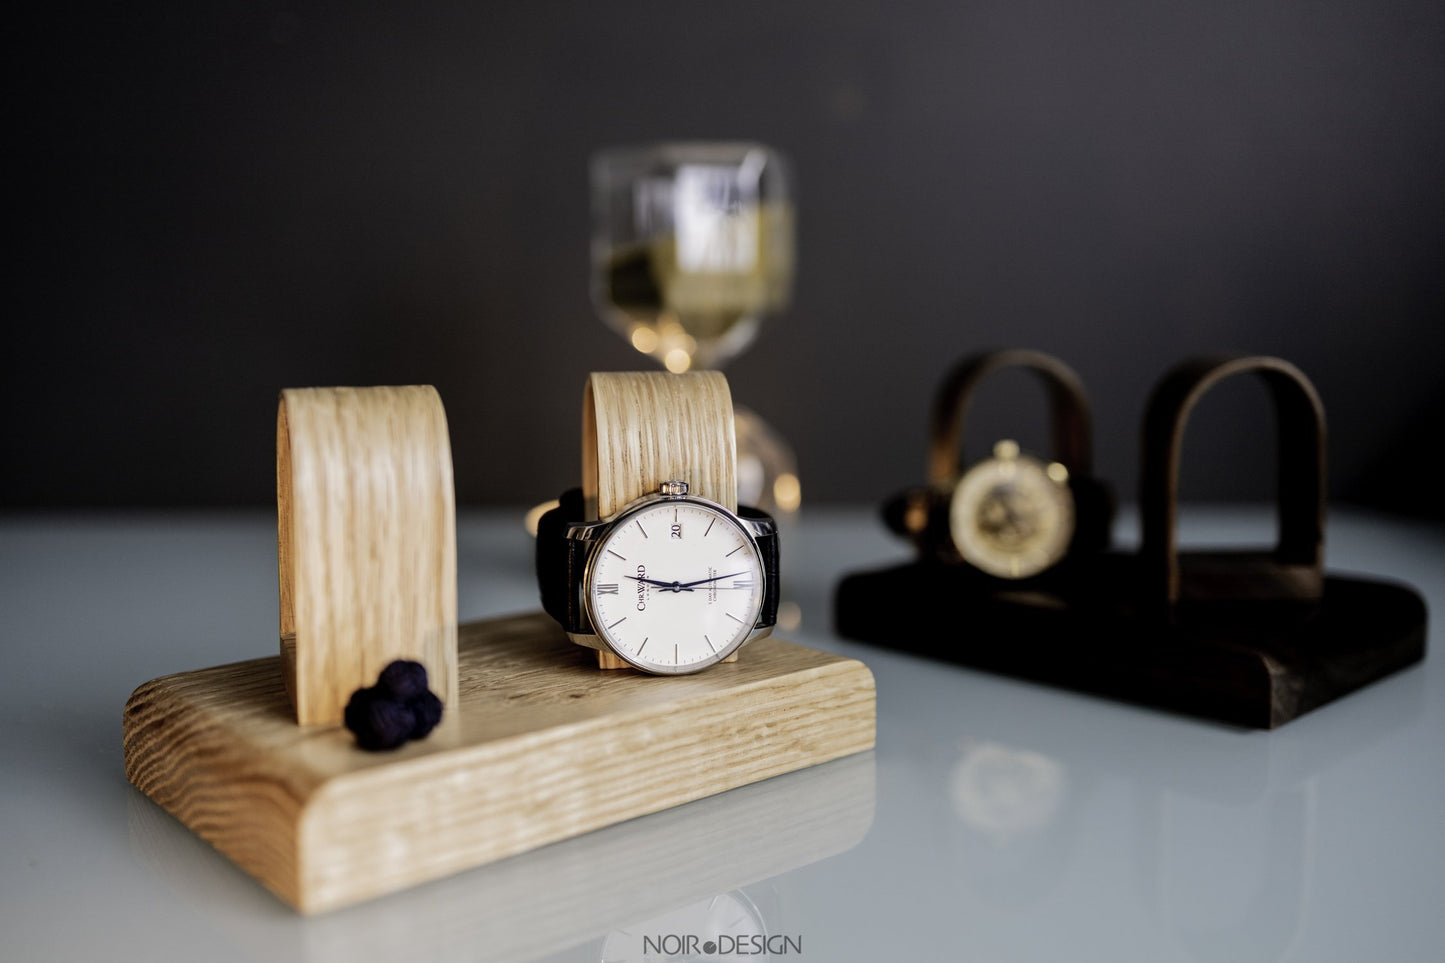 Luxury Oak Double Watch Stand Holder - Watch Display - NOIR.DESIGN